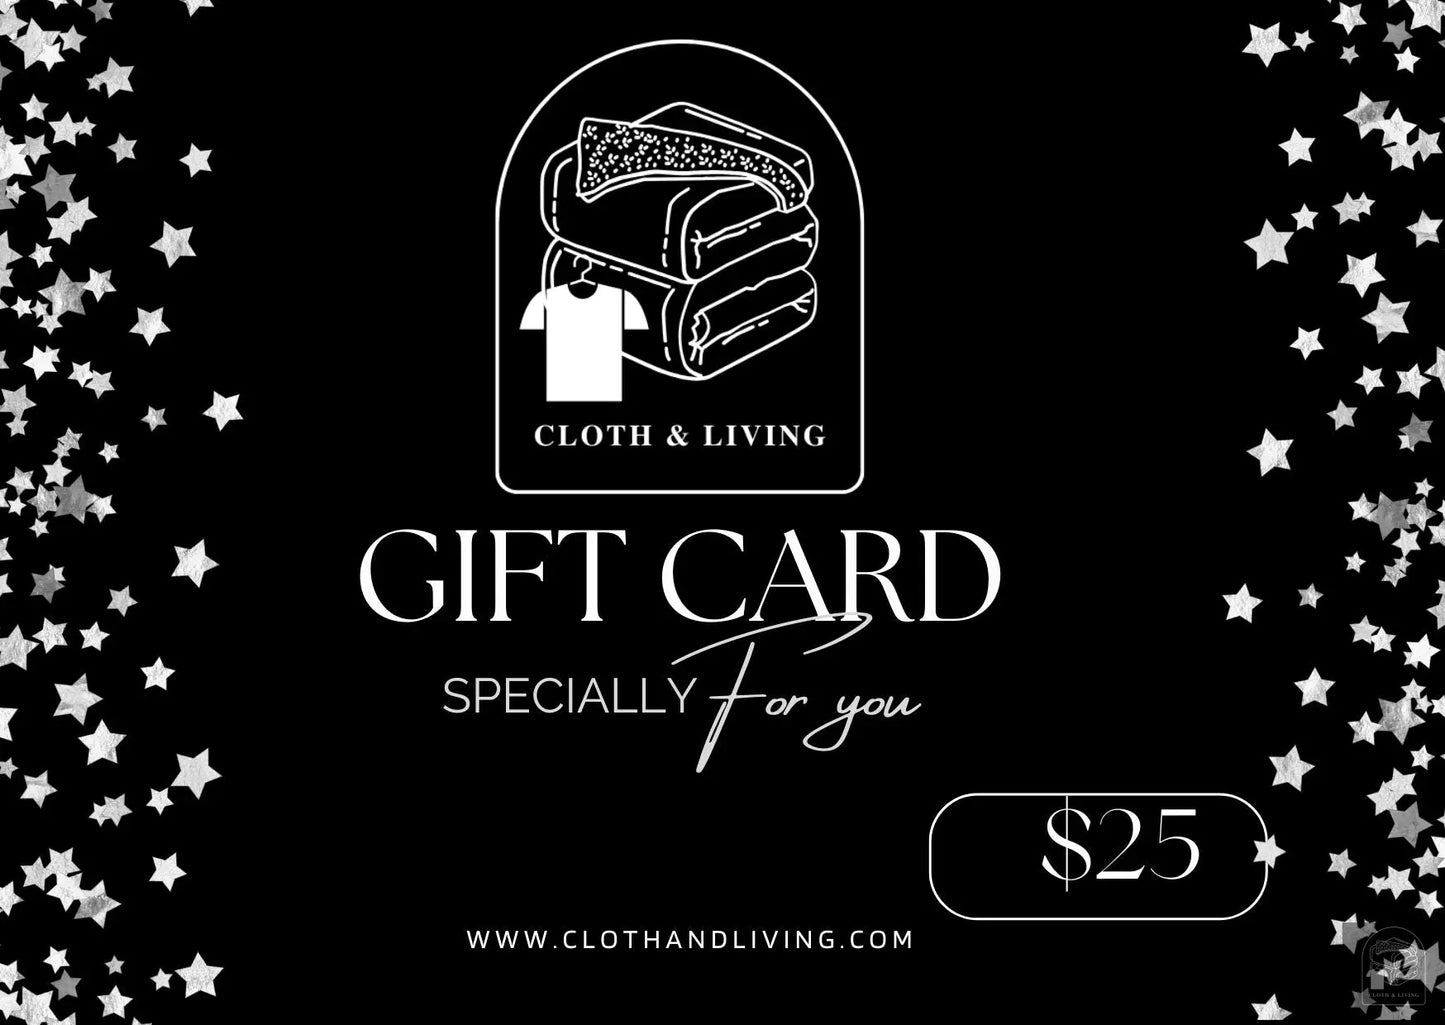 Cloth & Living Gift Card - Cloth & Living